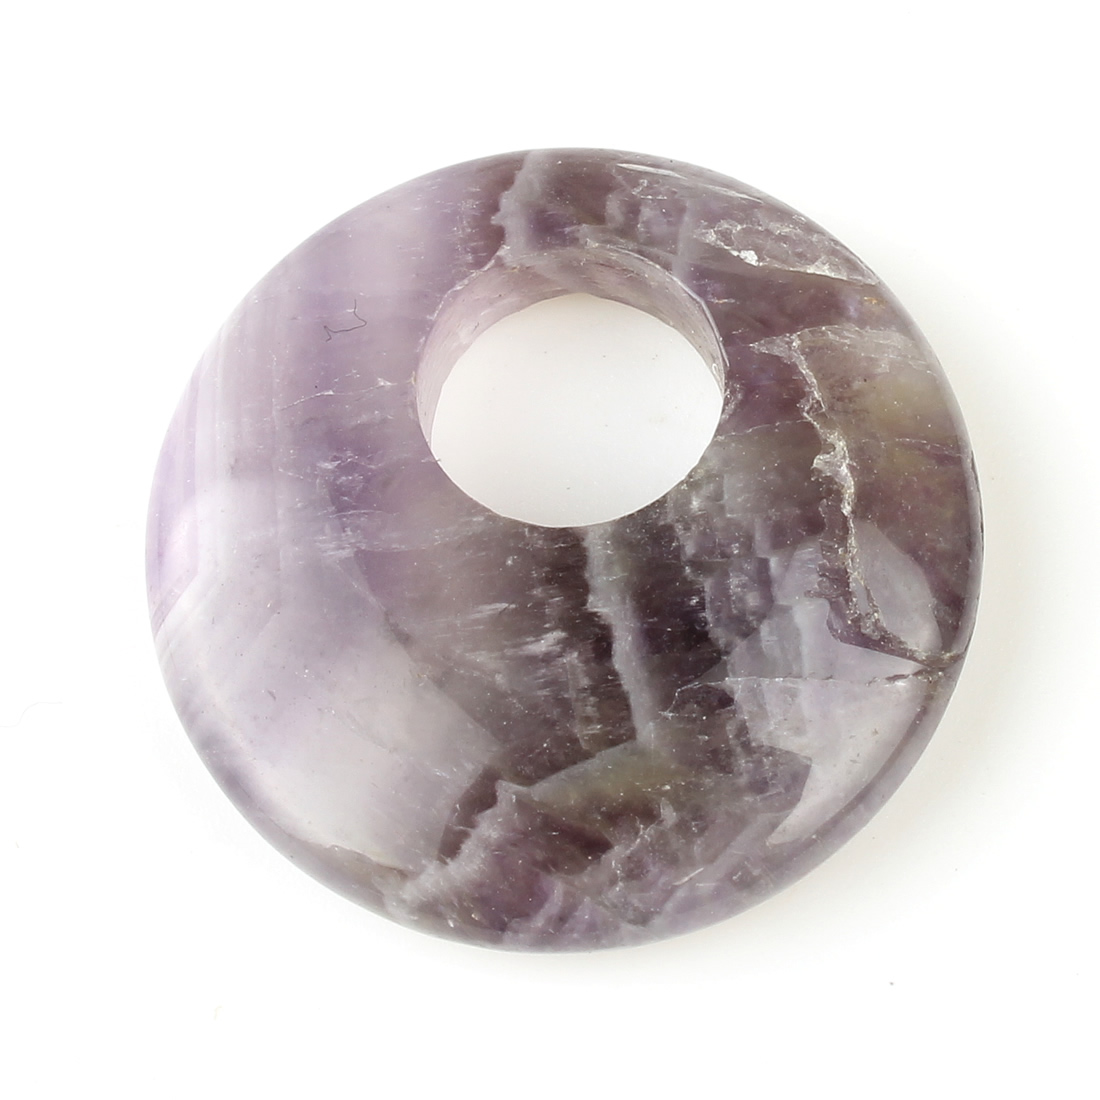  violeta gris